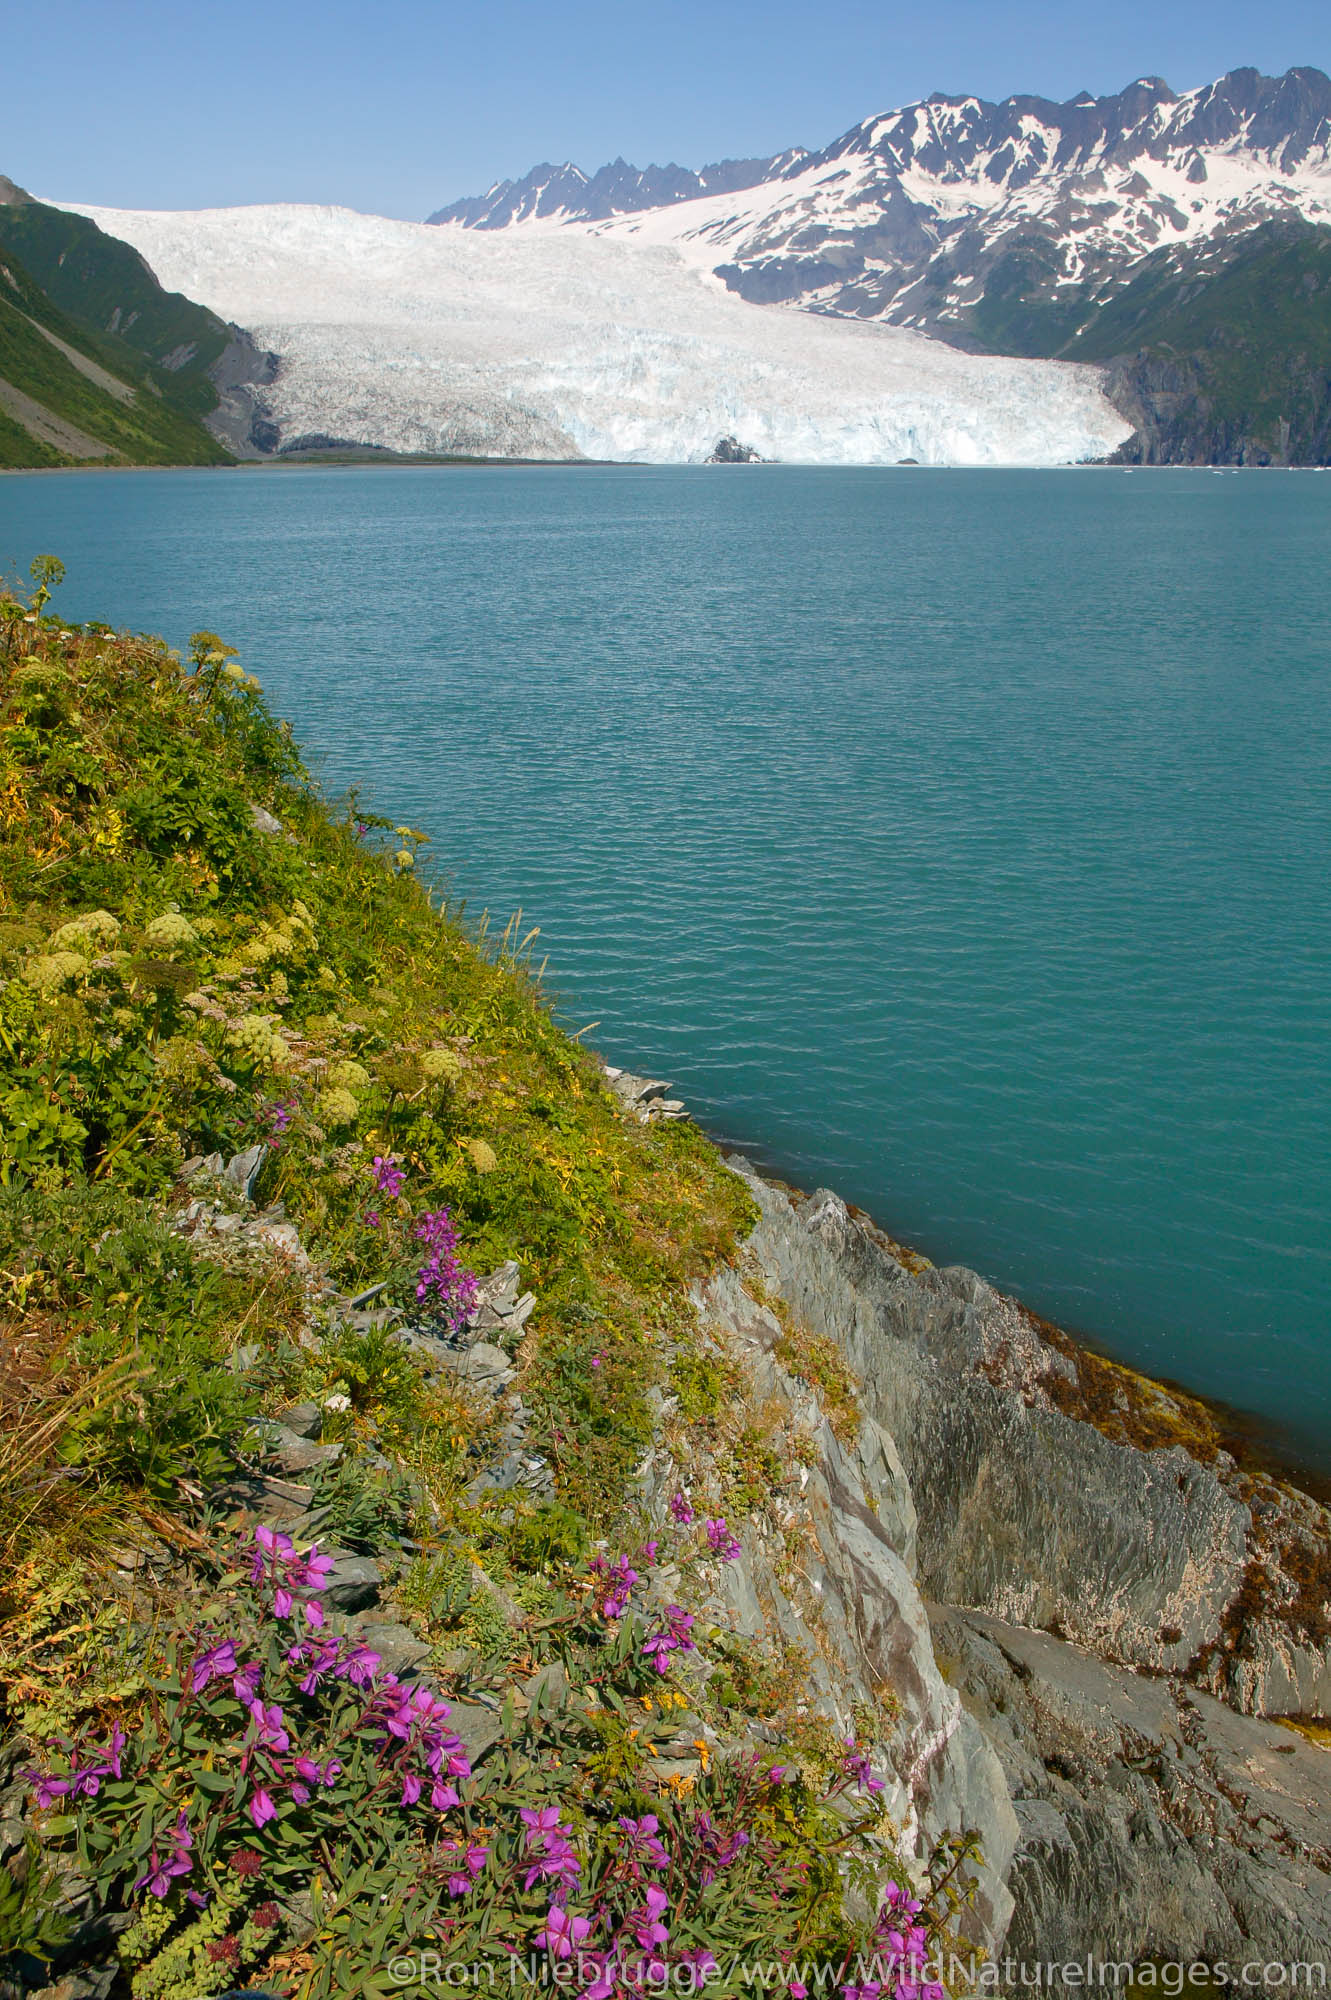 Aialik Glacier from Slate Island, Aialik Bay, Kenai Fjords National Park, Alaska.